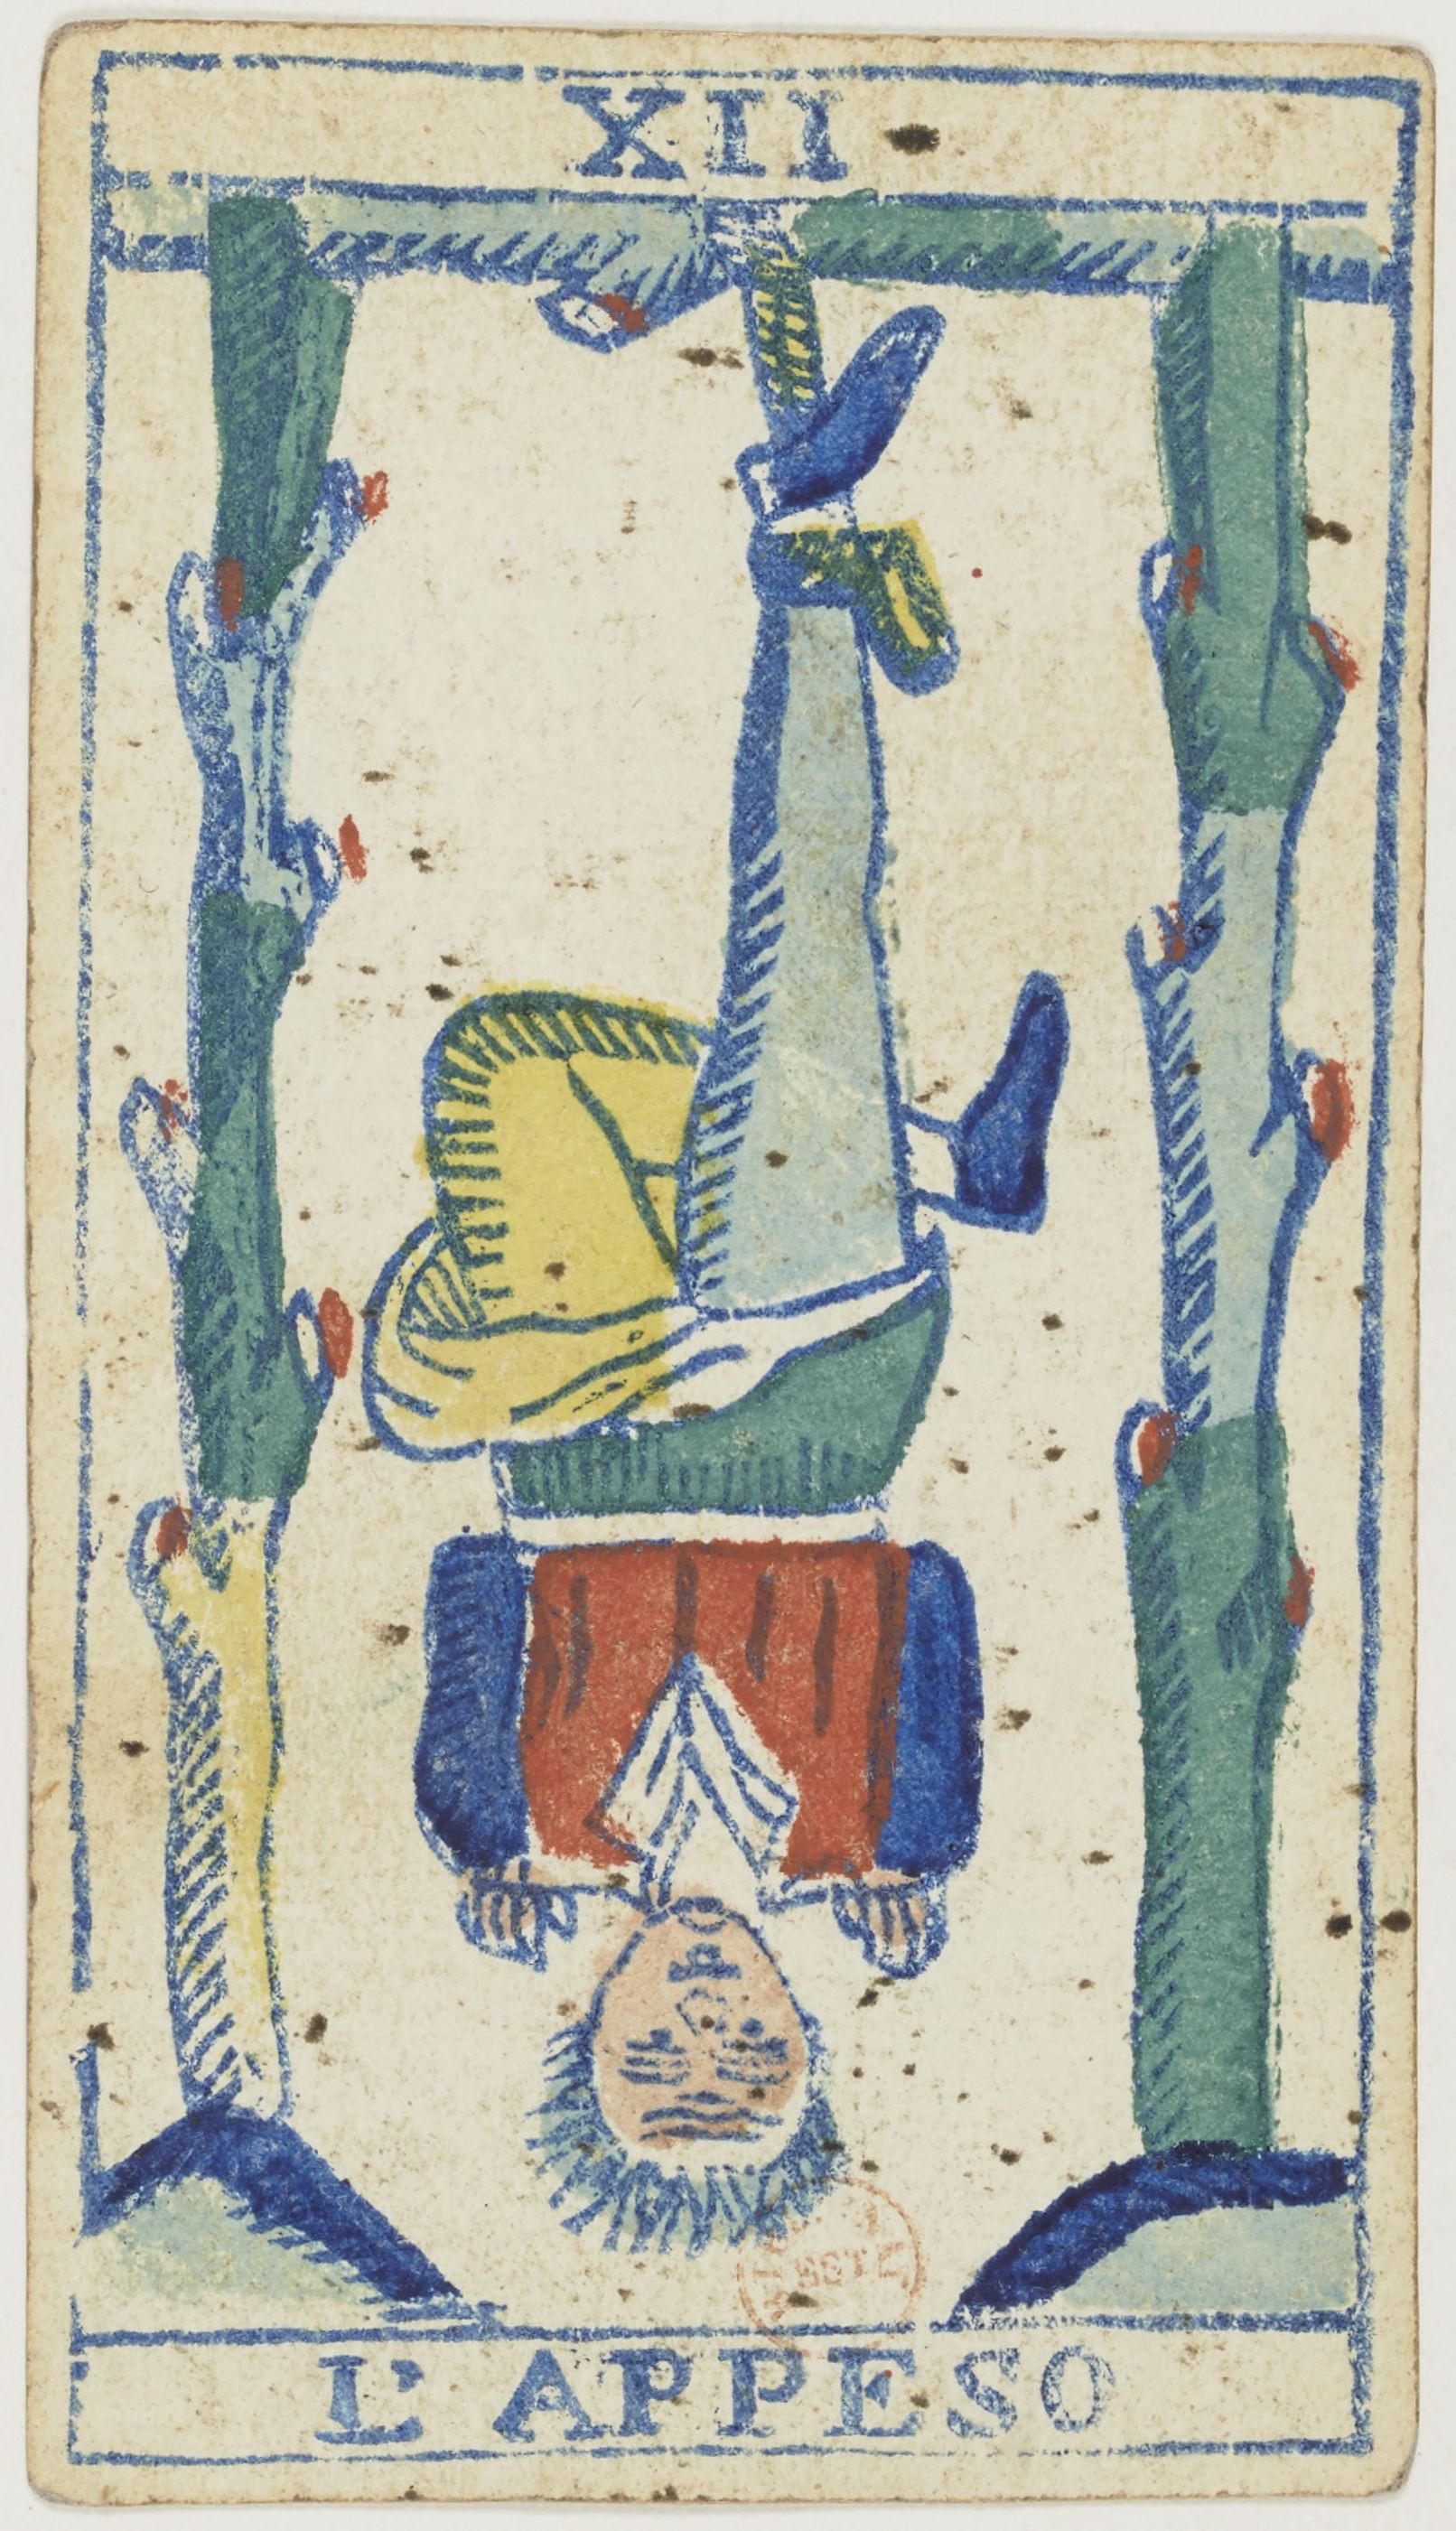 The Hanged Man in a Piedmontese Tarot deck, by F. F. Solesio (editor) https://commons.wikimedia.org/wiki/File:Piedmontese_tarot_deck_-_Solesio_-_1865_-_Trump_-_12_-_The_Hanged_Man.jpg?uselang=en-gb